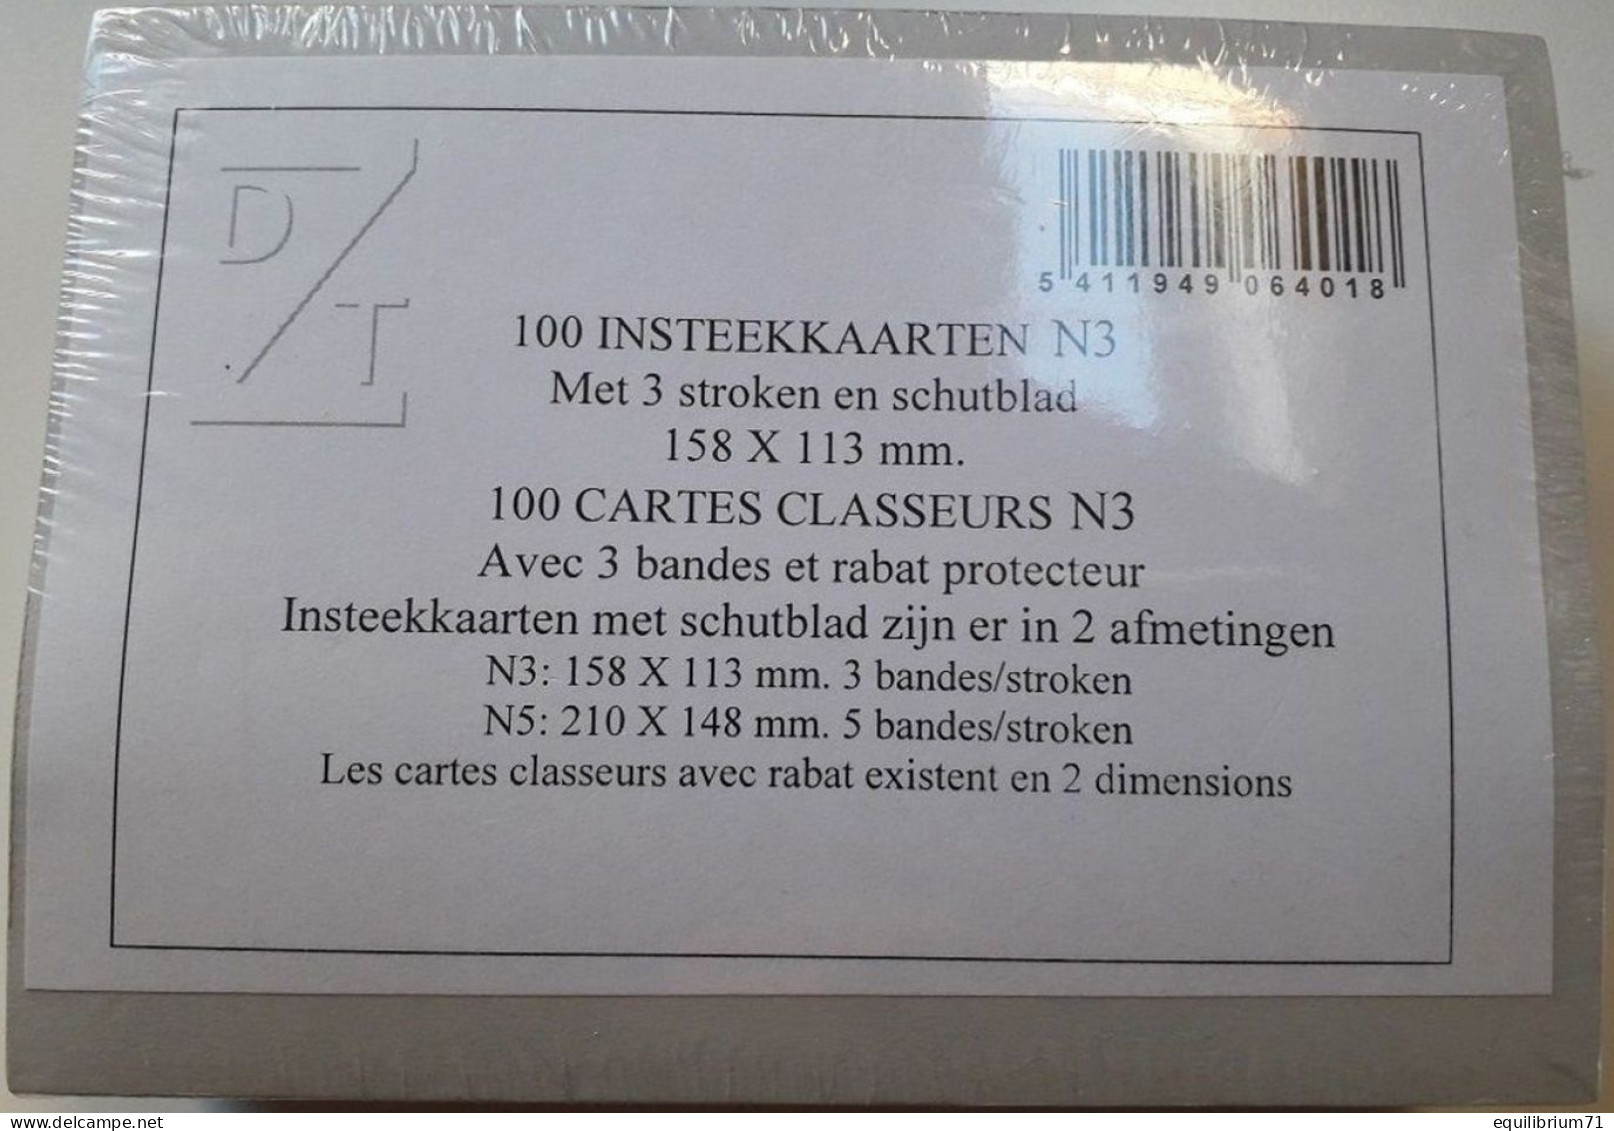 100 Cartes Classeurs / Insteekkaarten / Karten Einlegen / Insert Cards - DZT N3 - Etichette